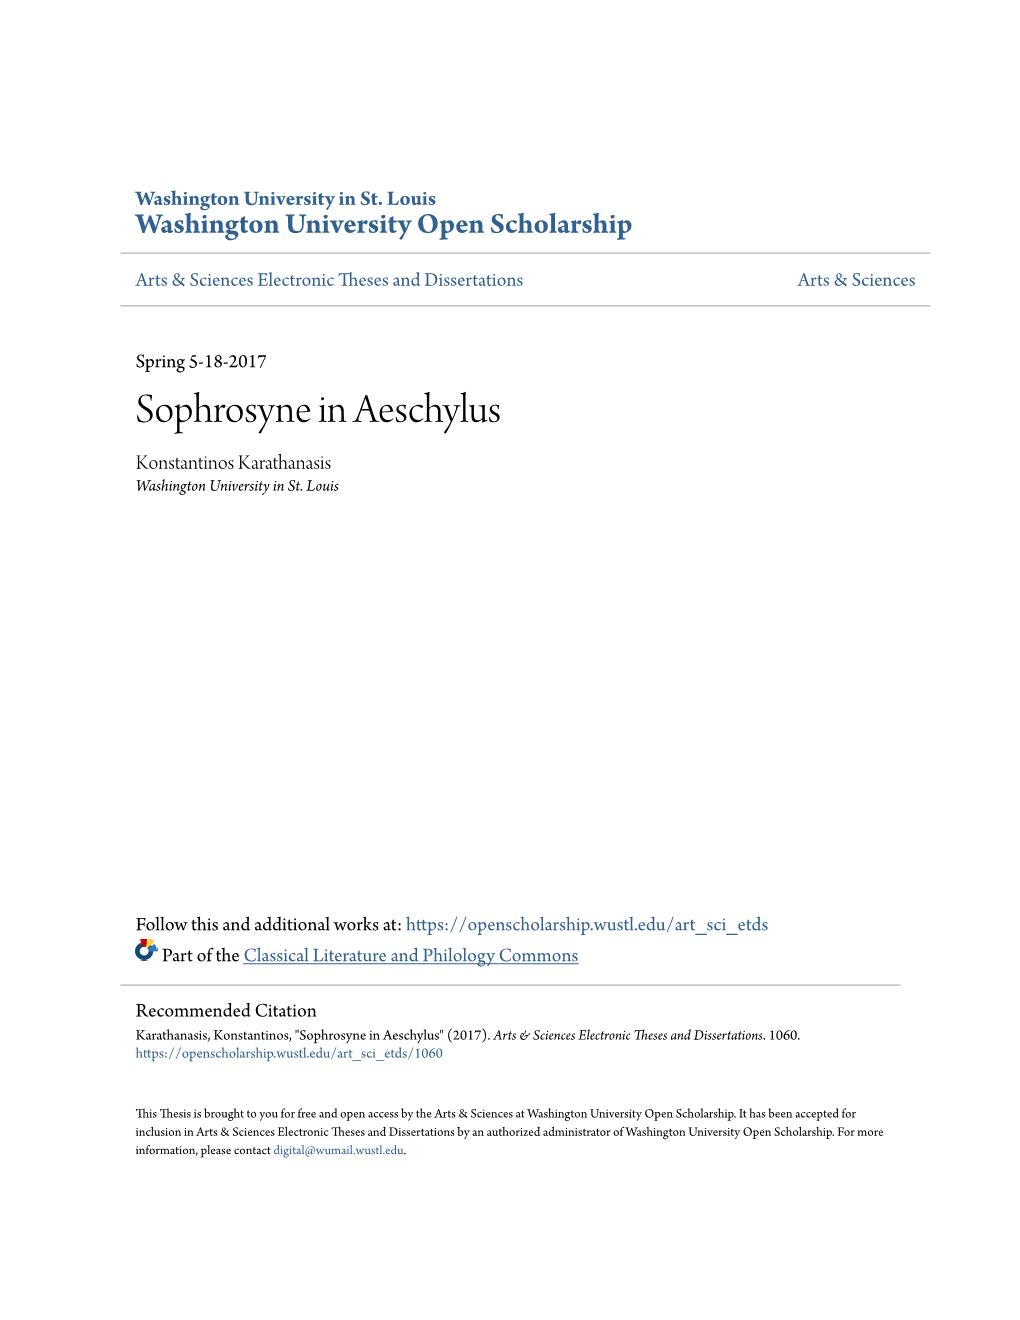 Sophrosyne in Aeschylus Konstantinos Karathanasis Washington University in St